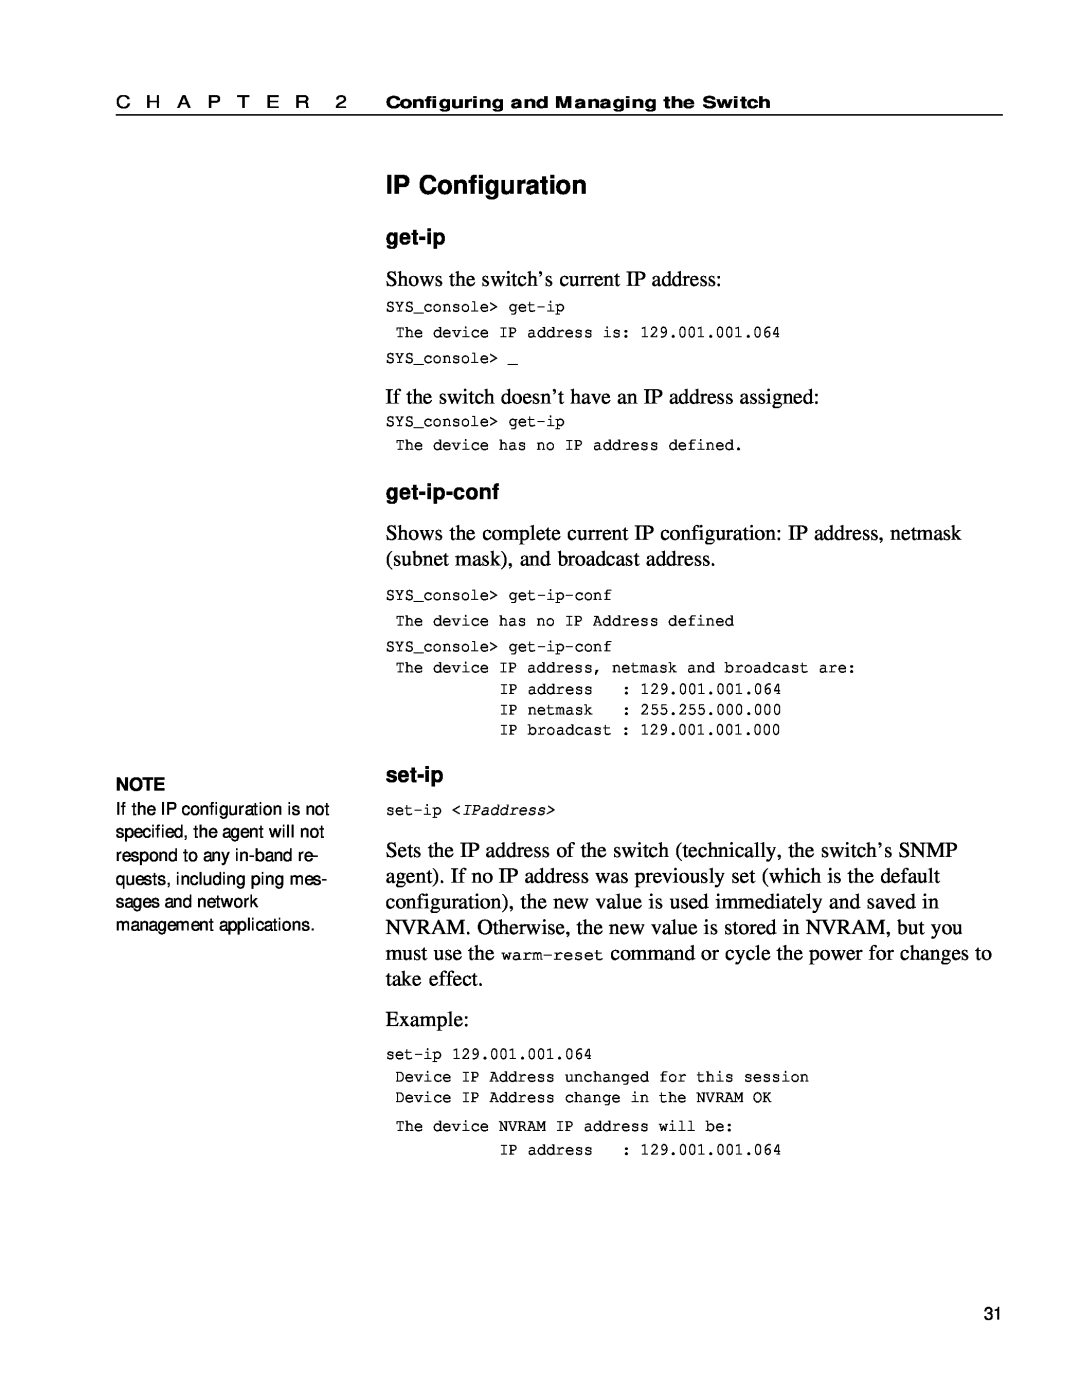 Intel 654655-001 manual IP Configuration, get-ip-conf, set-ip 